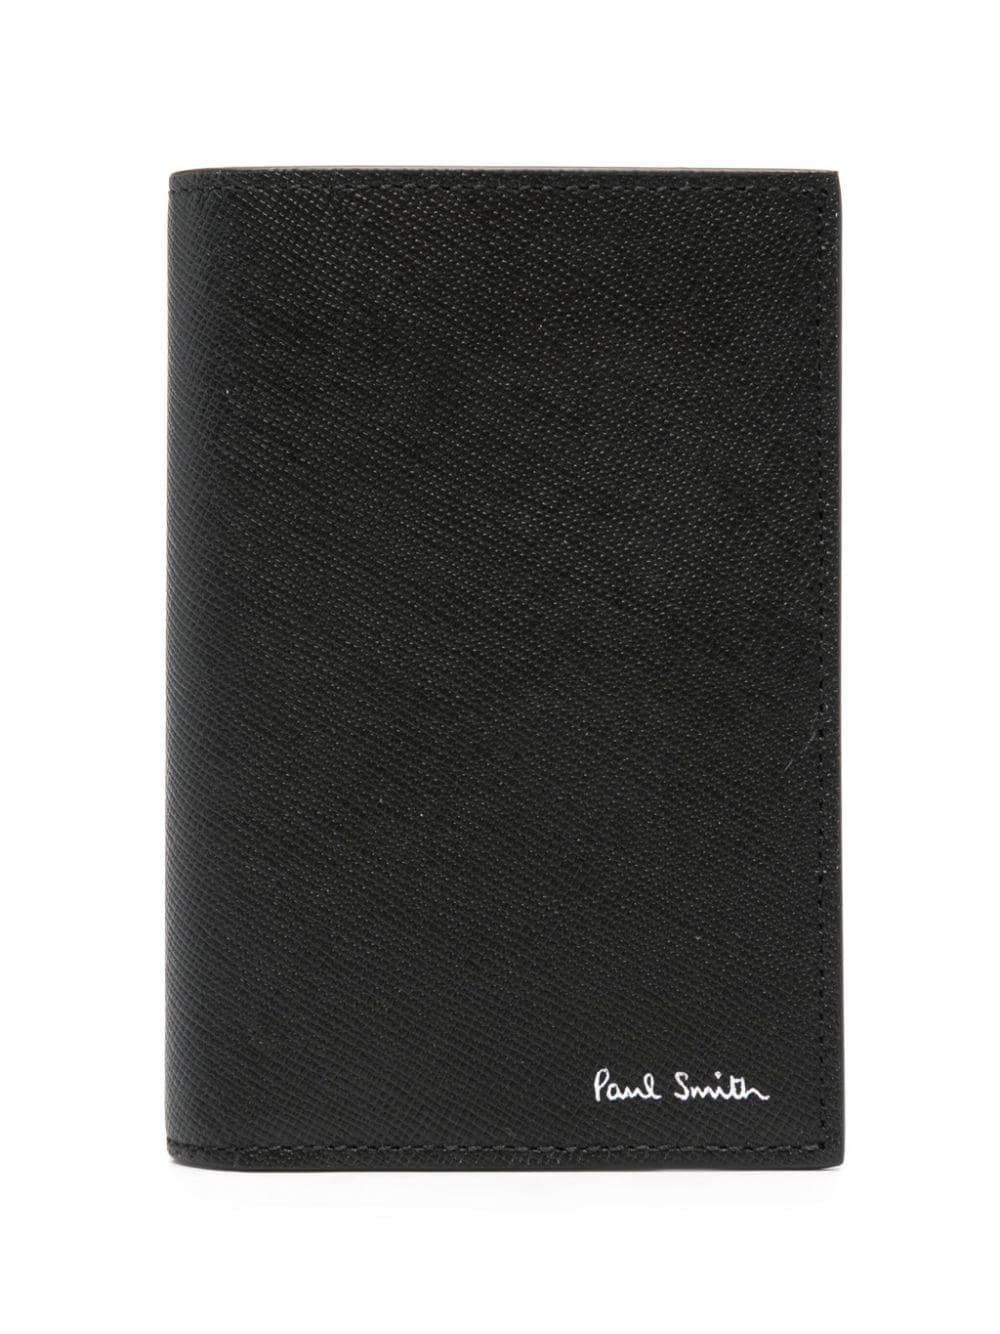 Paul Smith Mini Blur Leather Wallet In Black